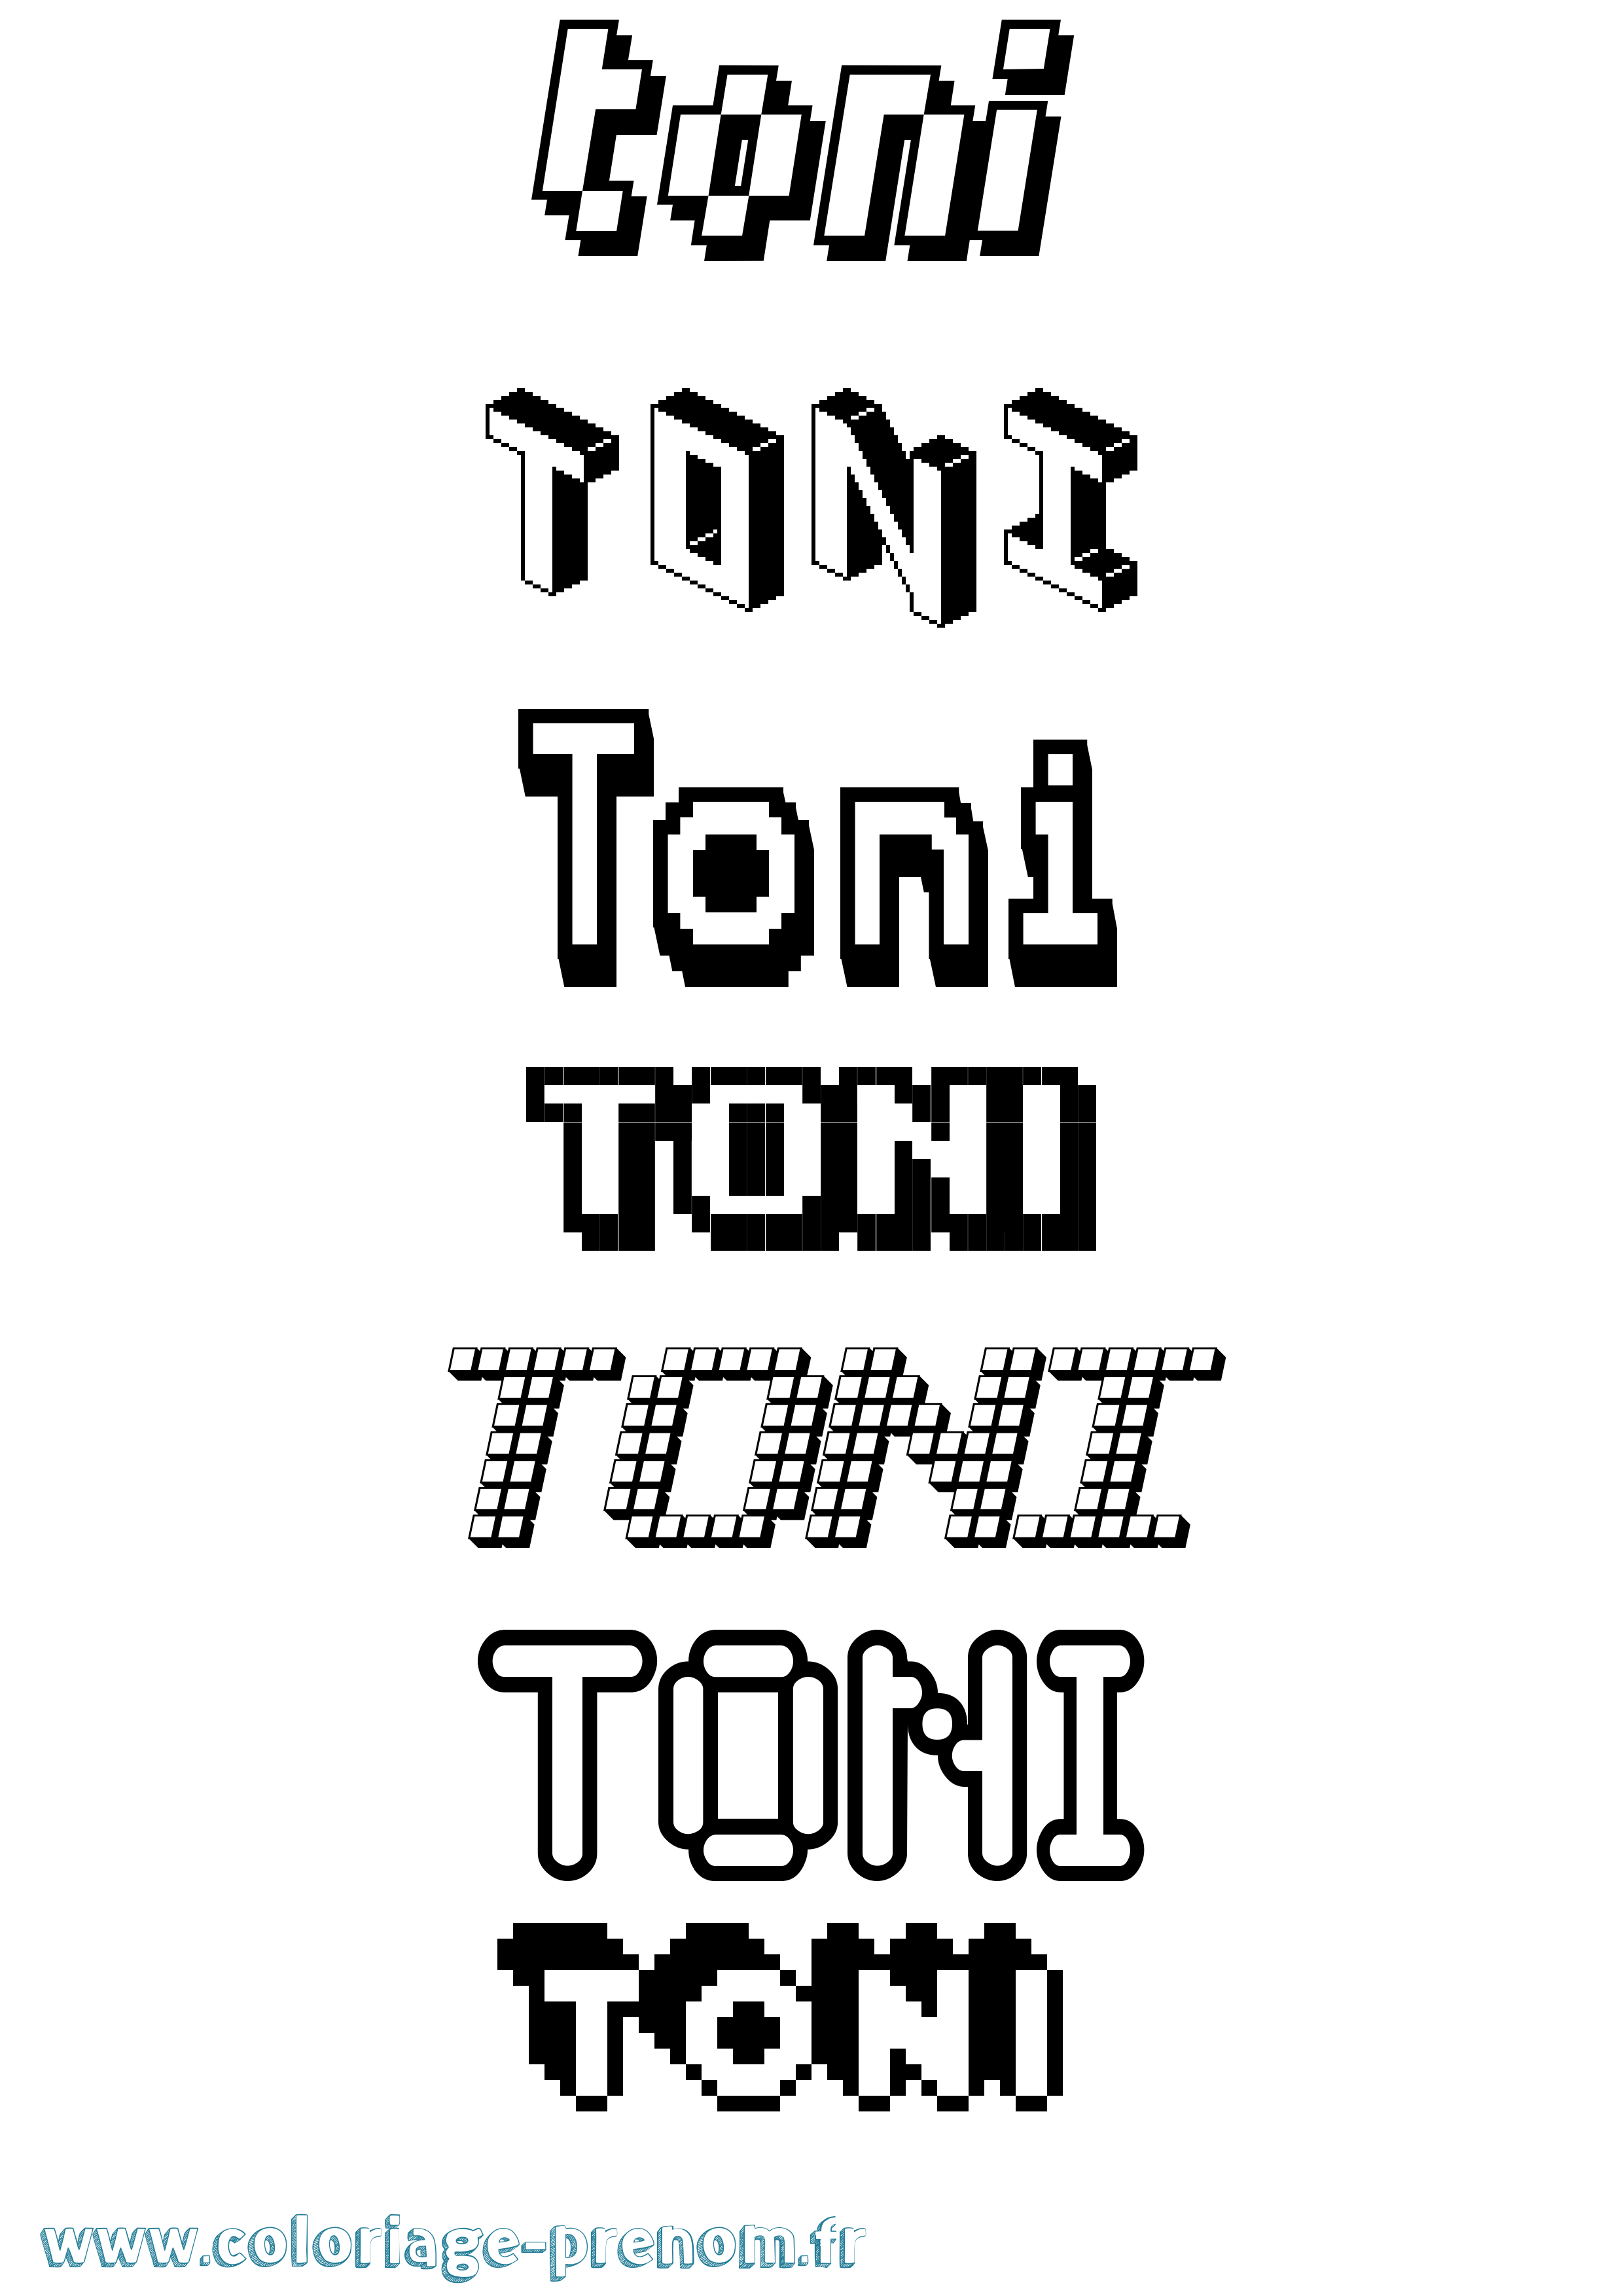 Coloriage prénom Toni Pixel